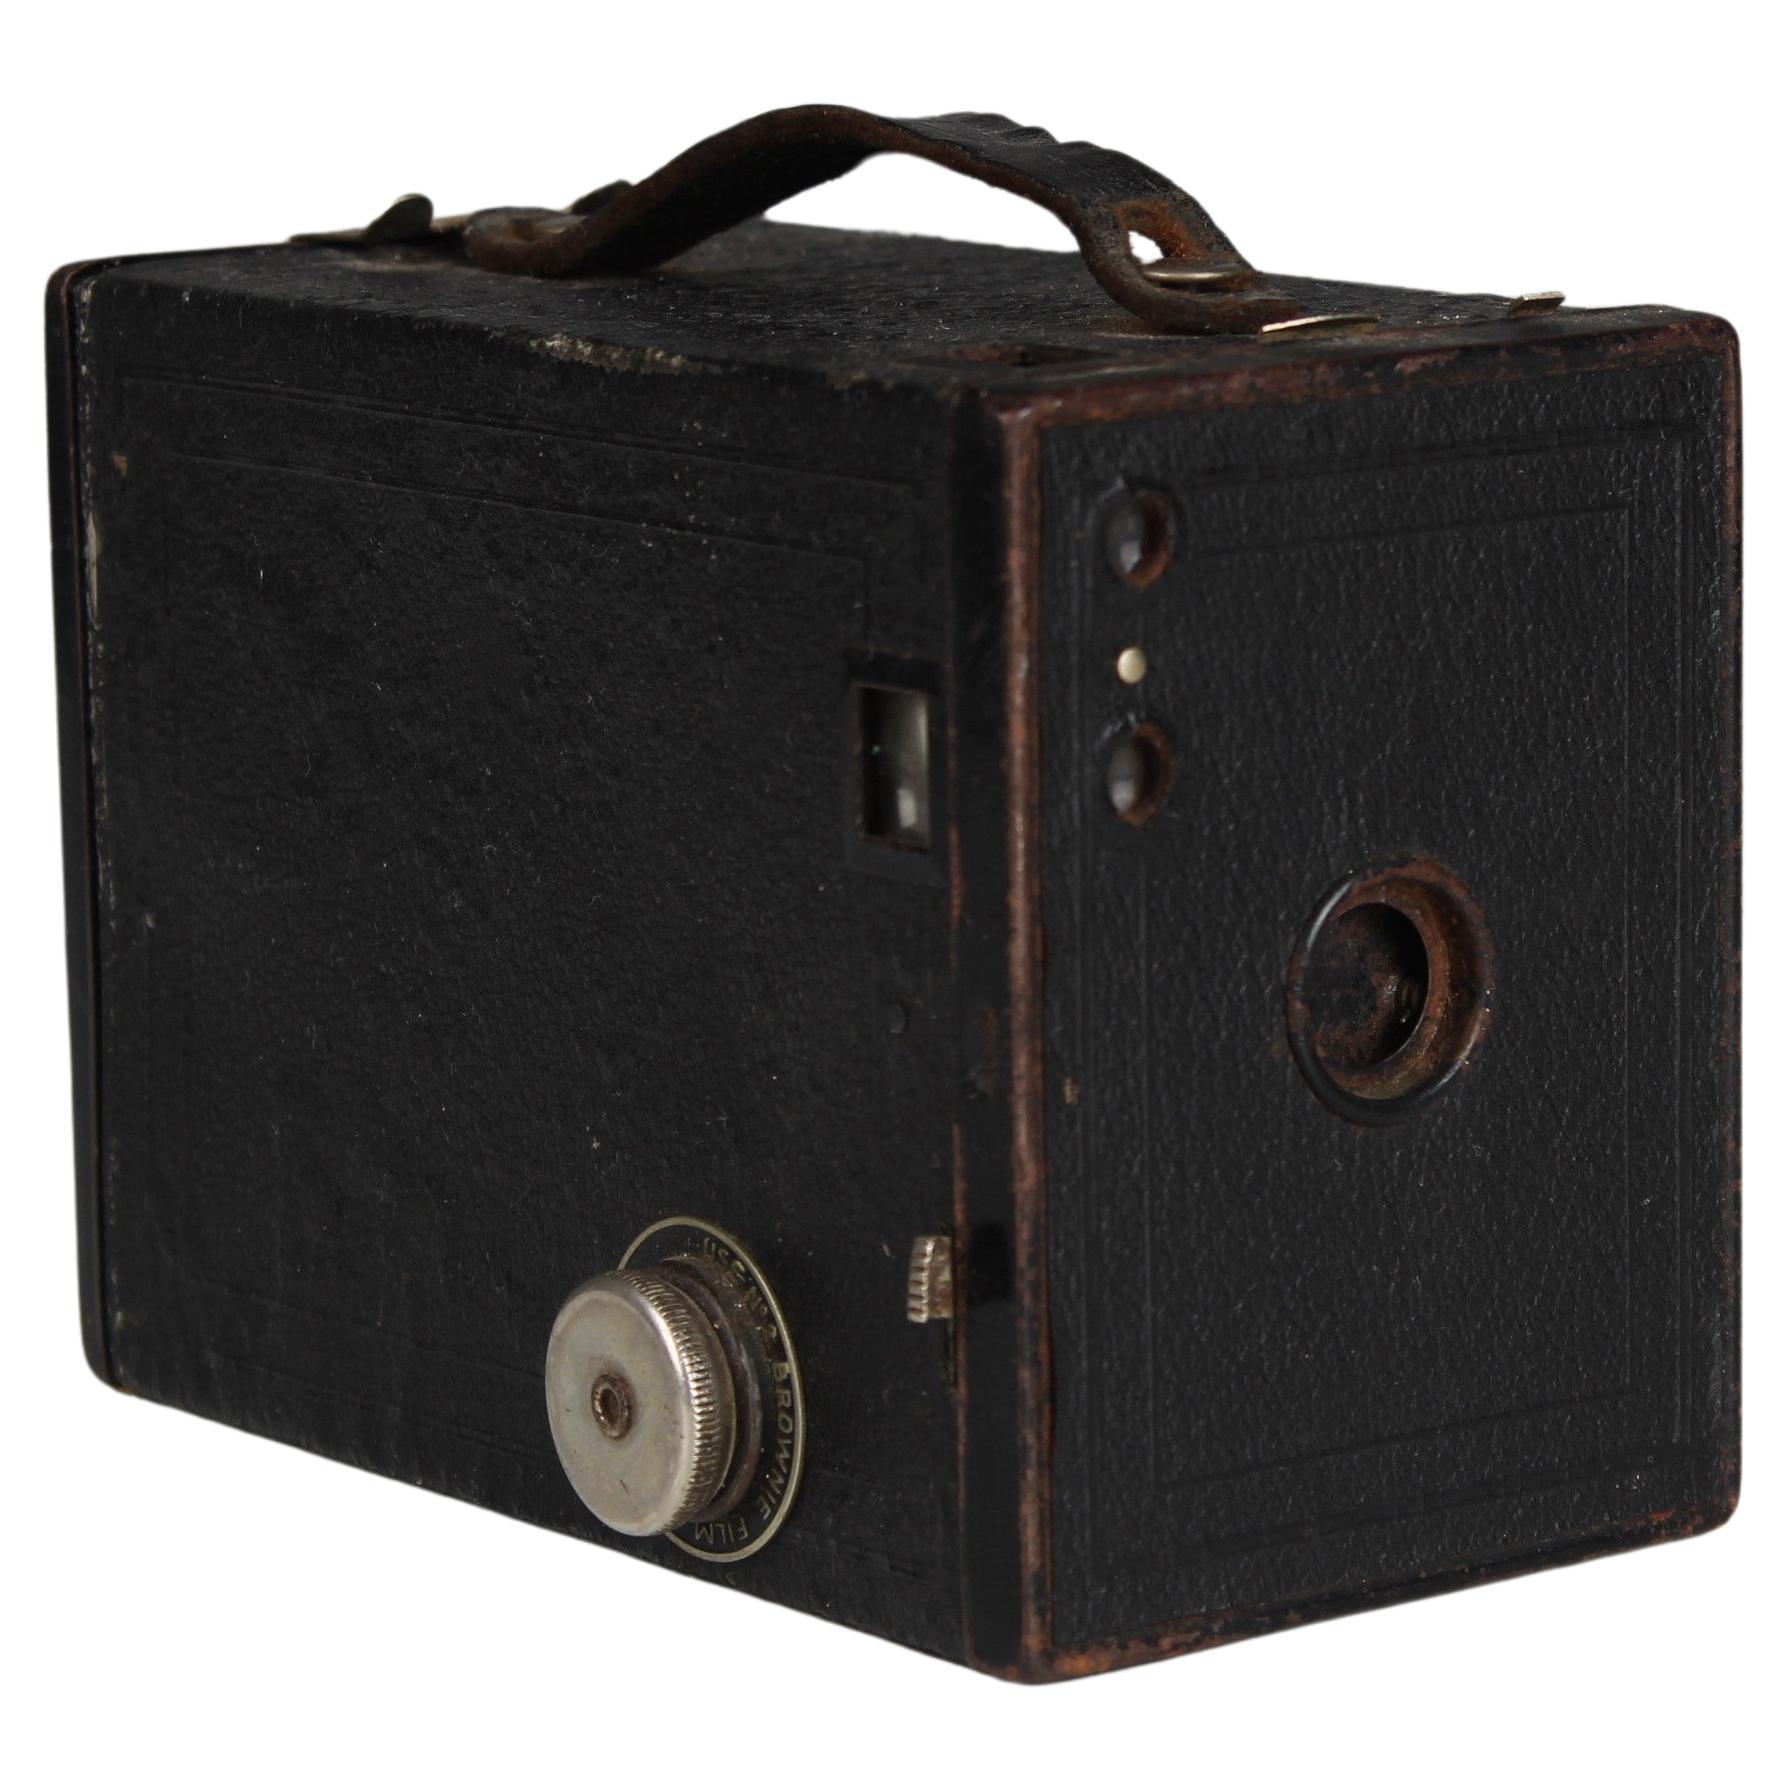 Vintage Travel Camera, Box Camera No. 2 Brownie, 1930s